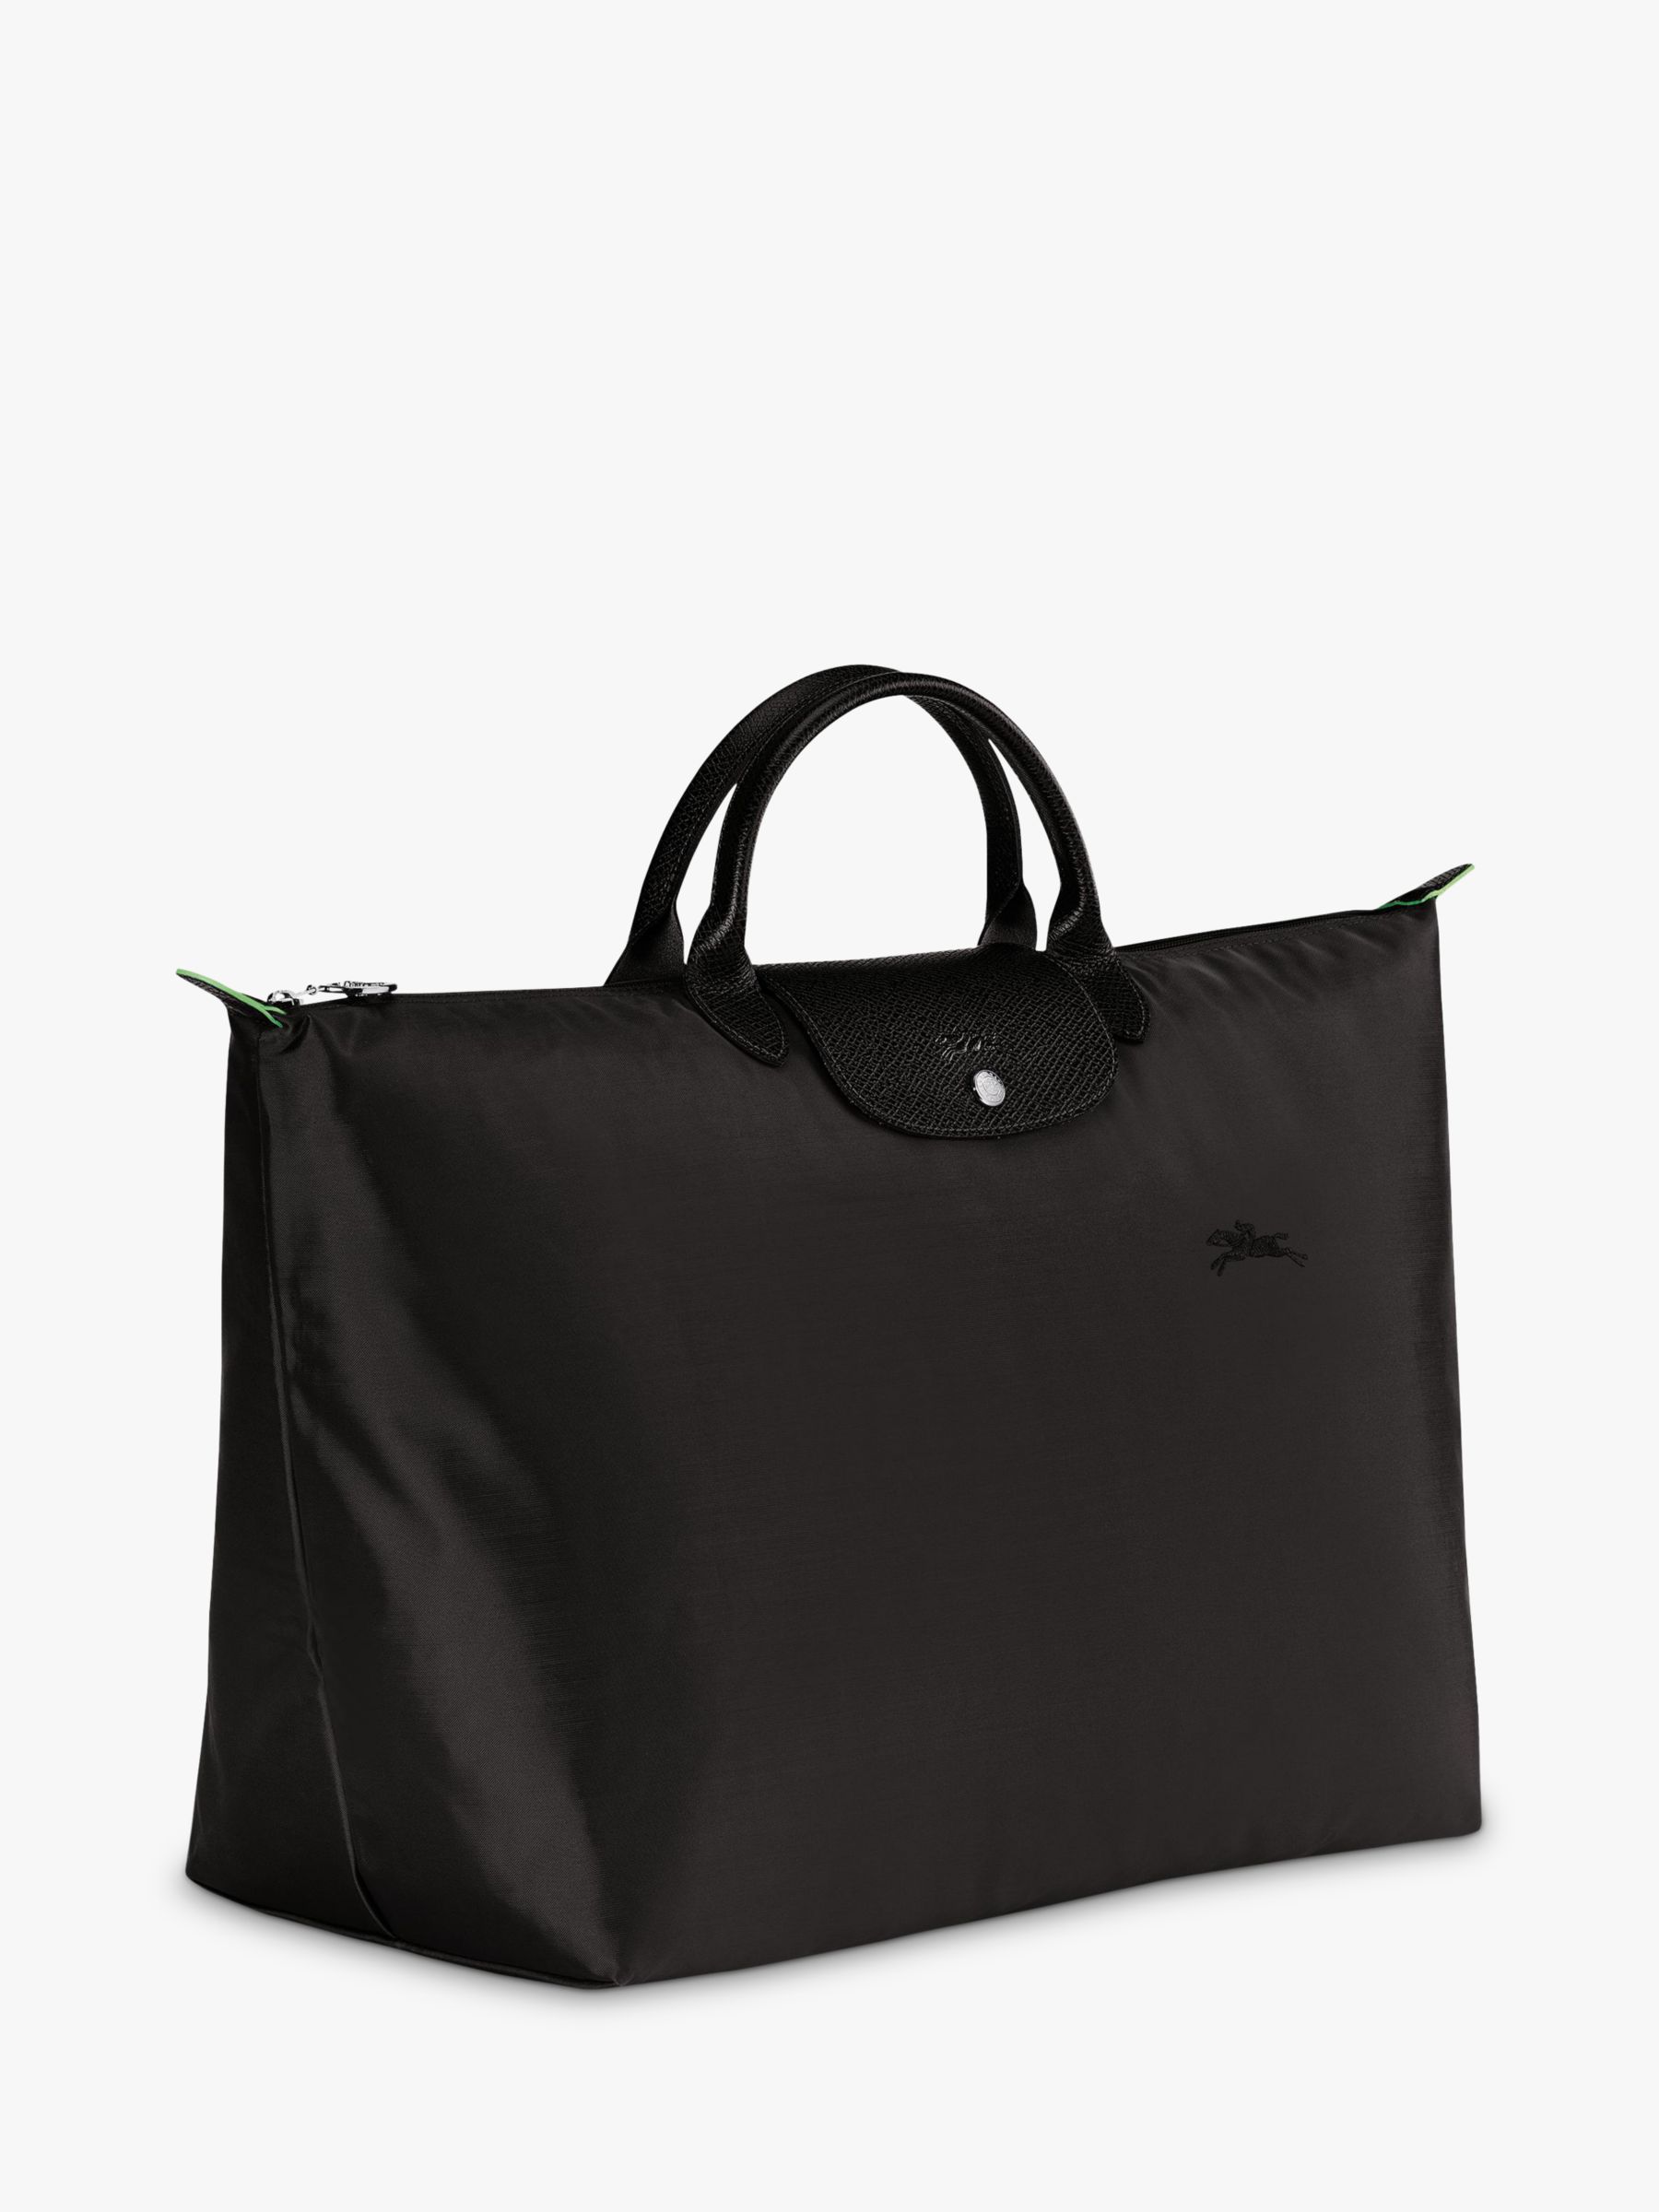 Longchamp Le Pliage Original XL Travel Bag, Black at John Lewis & Partners